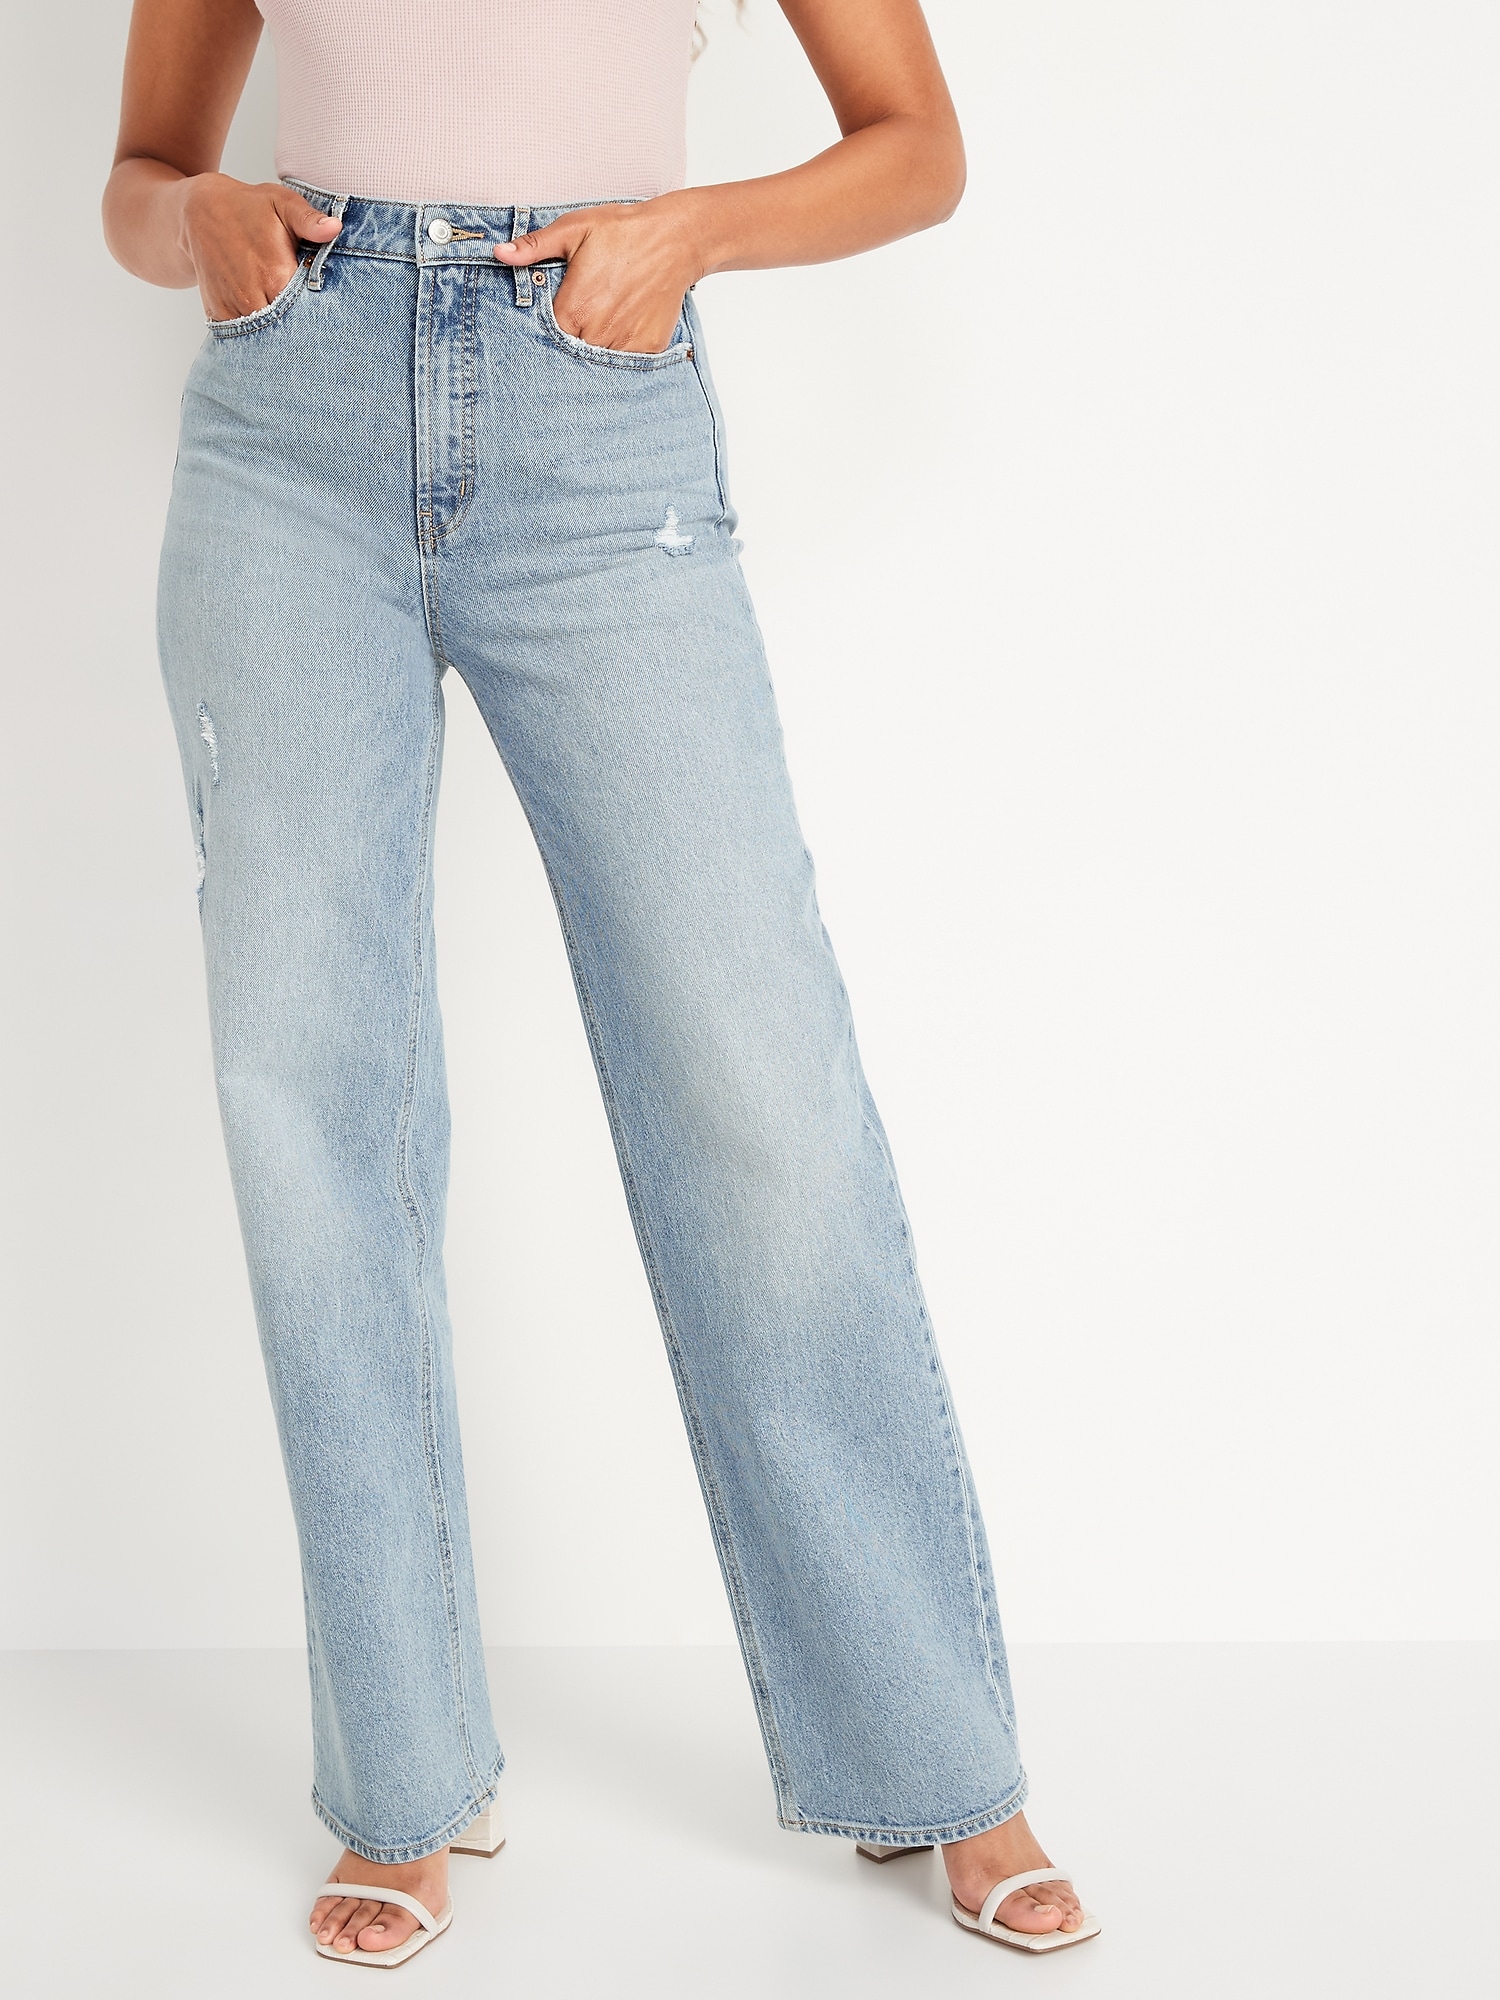 Jeans for Women Women Fashion High Waist Pocket Solid Casual Loose Wide Leg  Pants Jeans Womens Jeans Black XXL